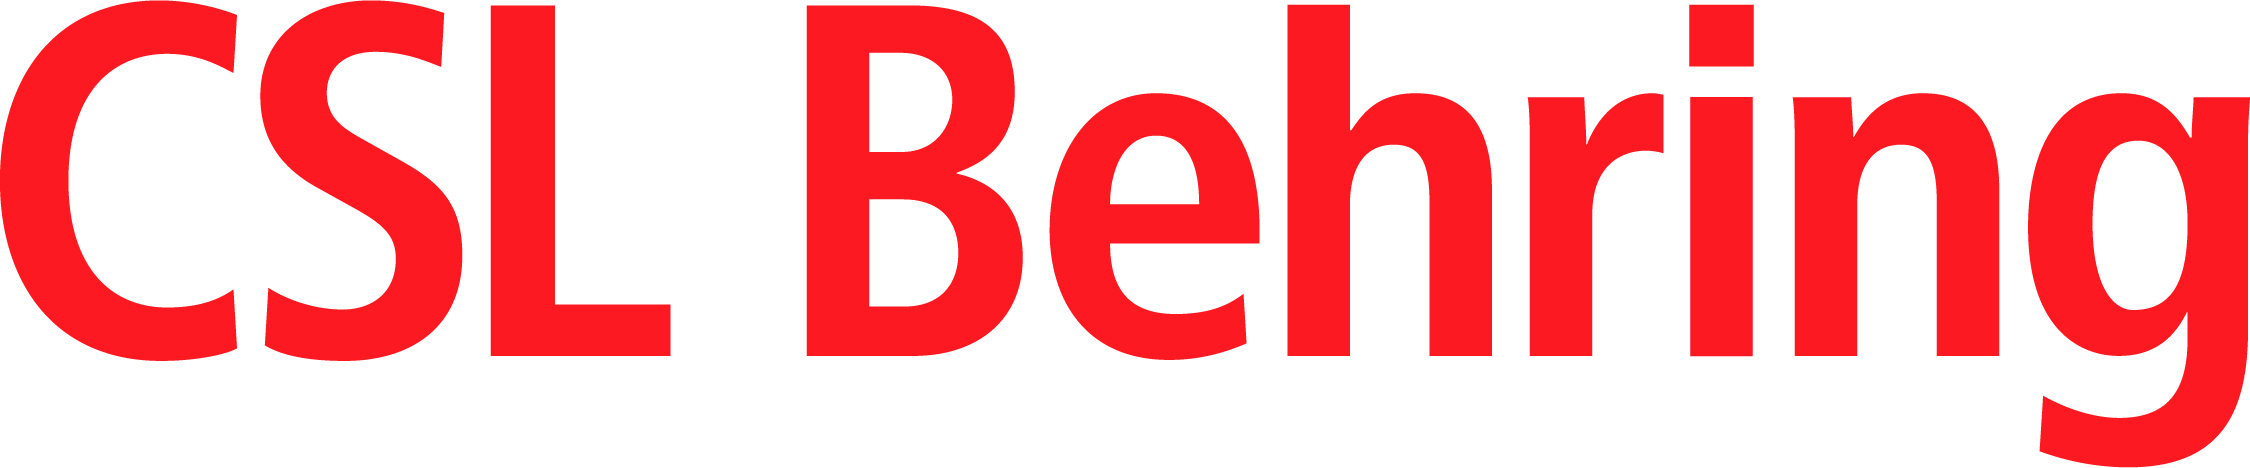 CSL-Behring logo